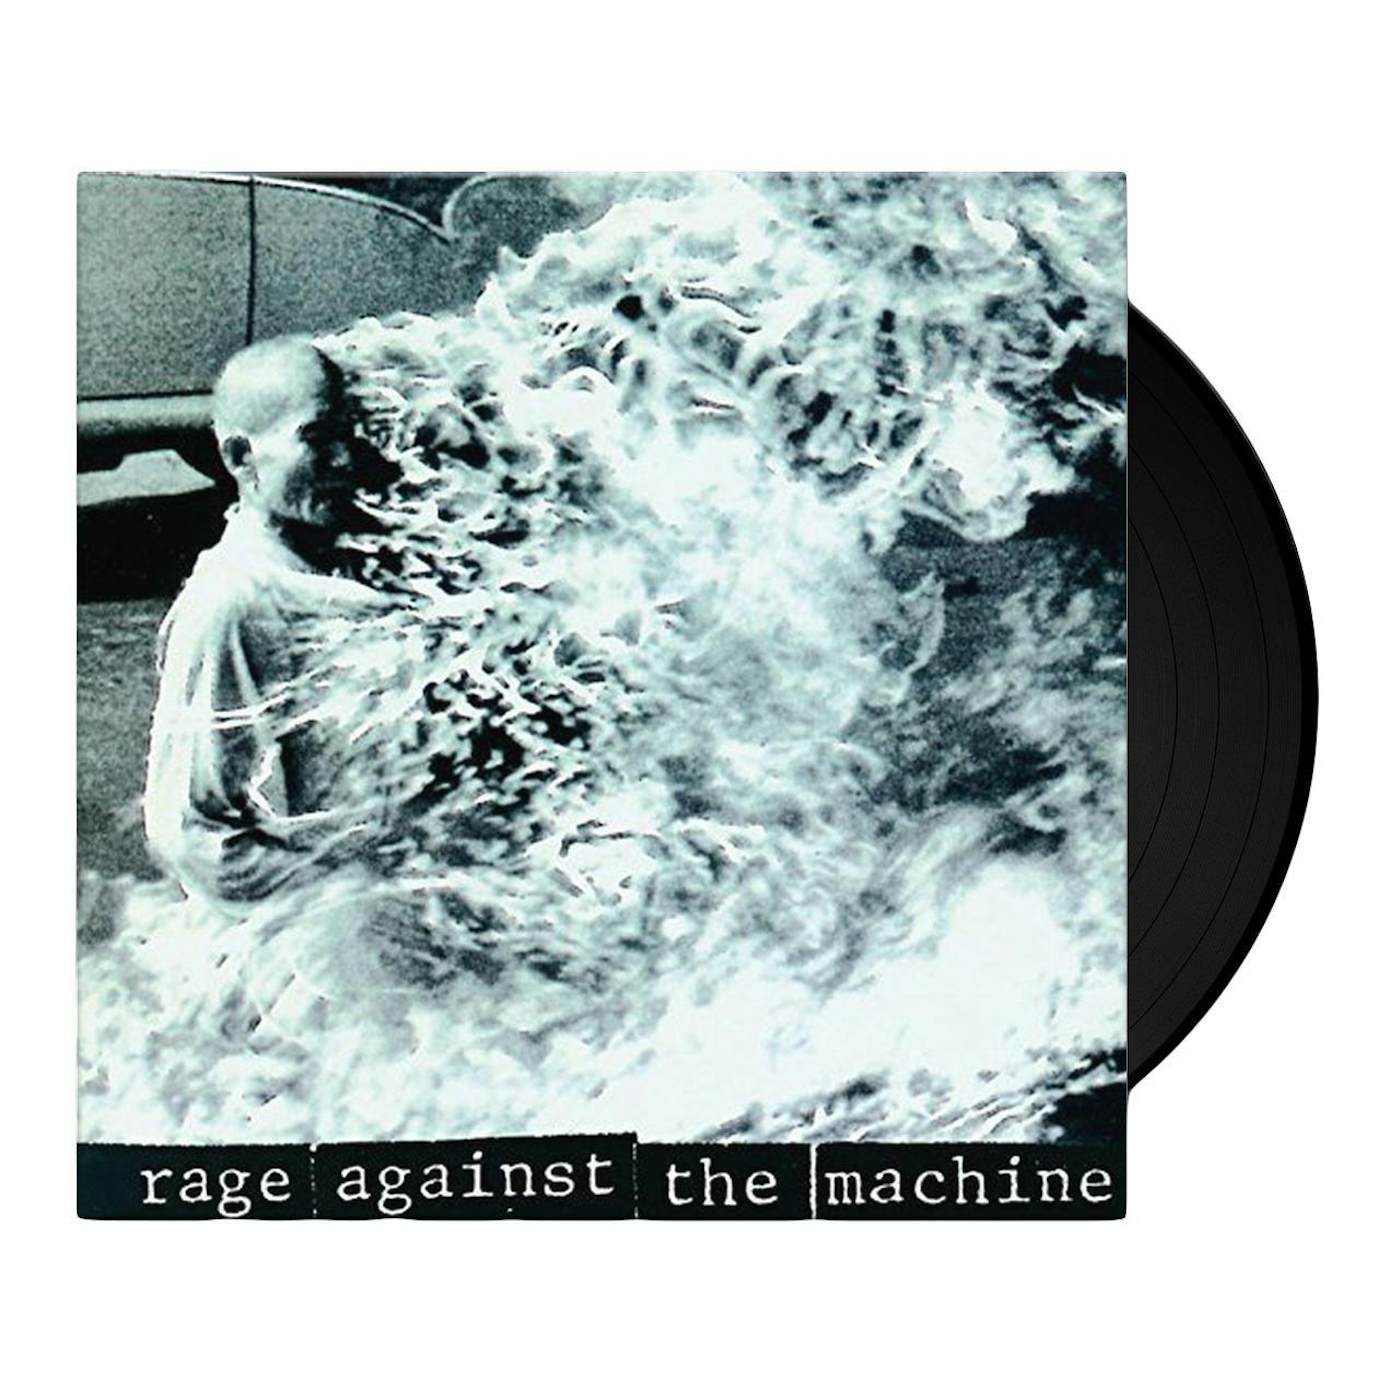  Rage Against The Machine Vinyl Record